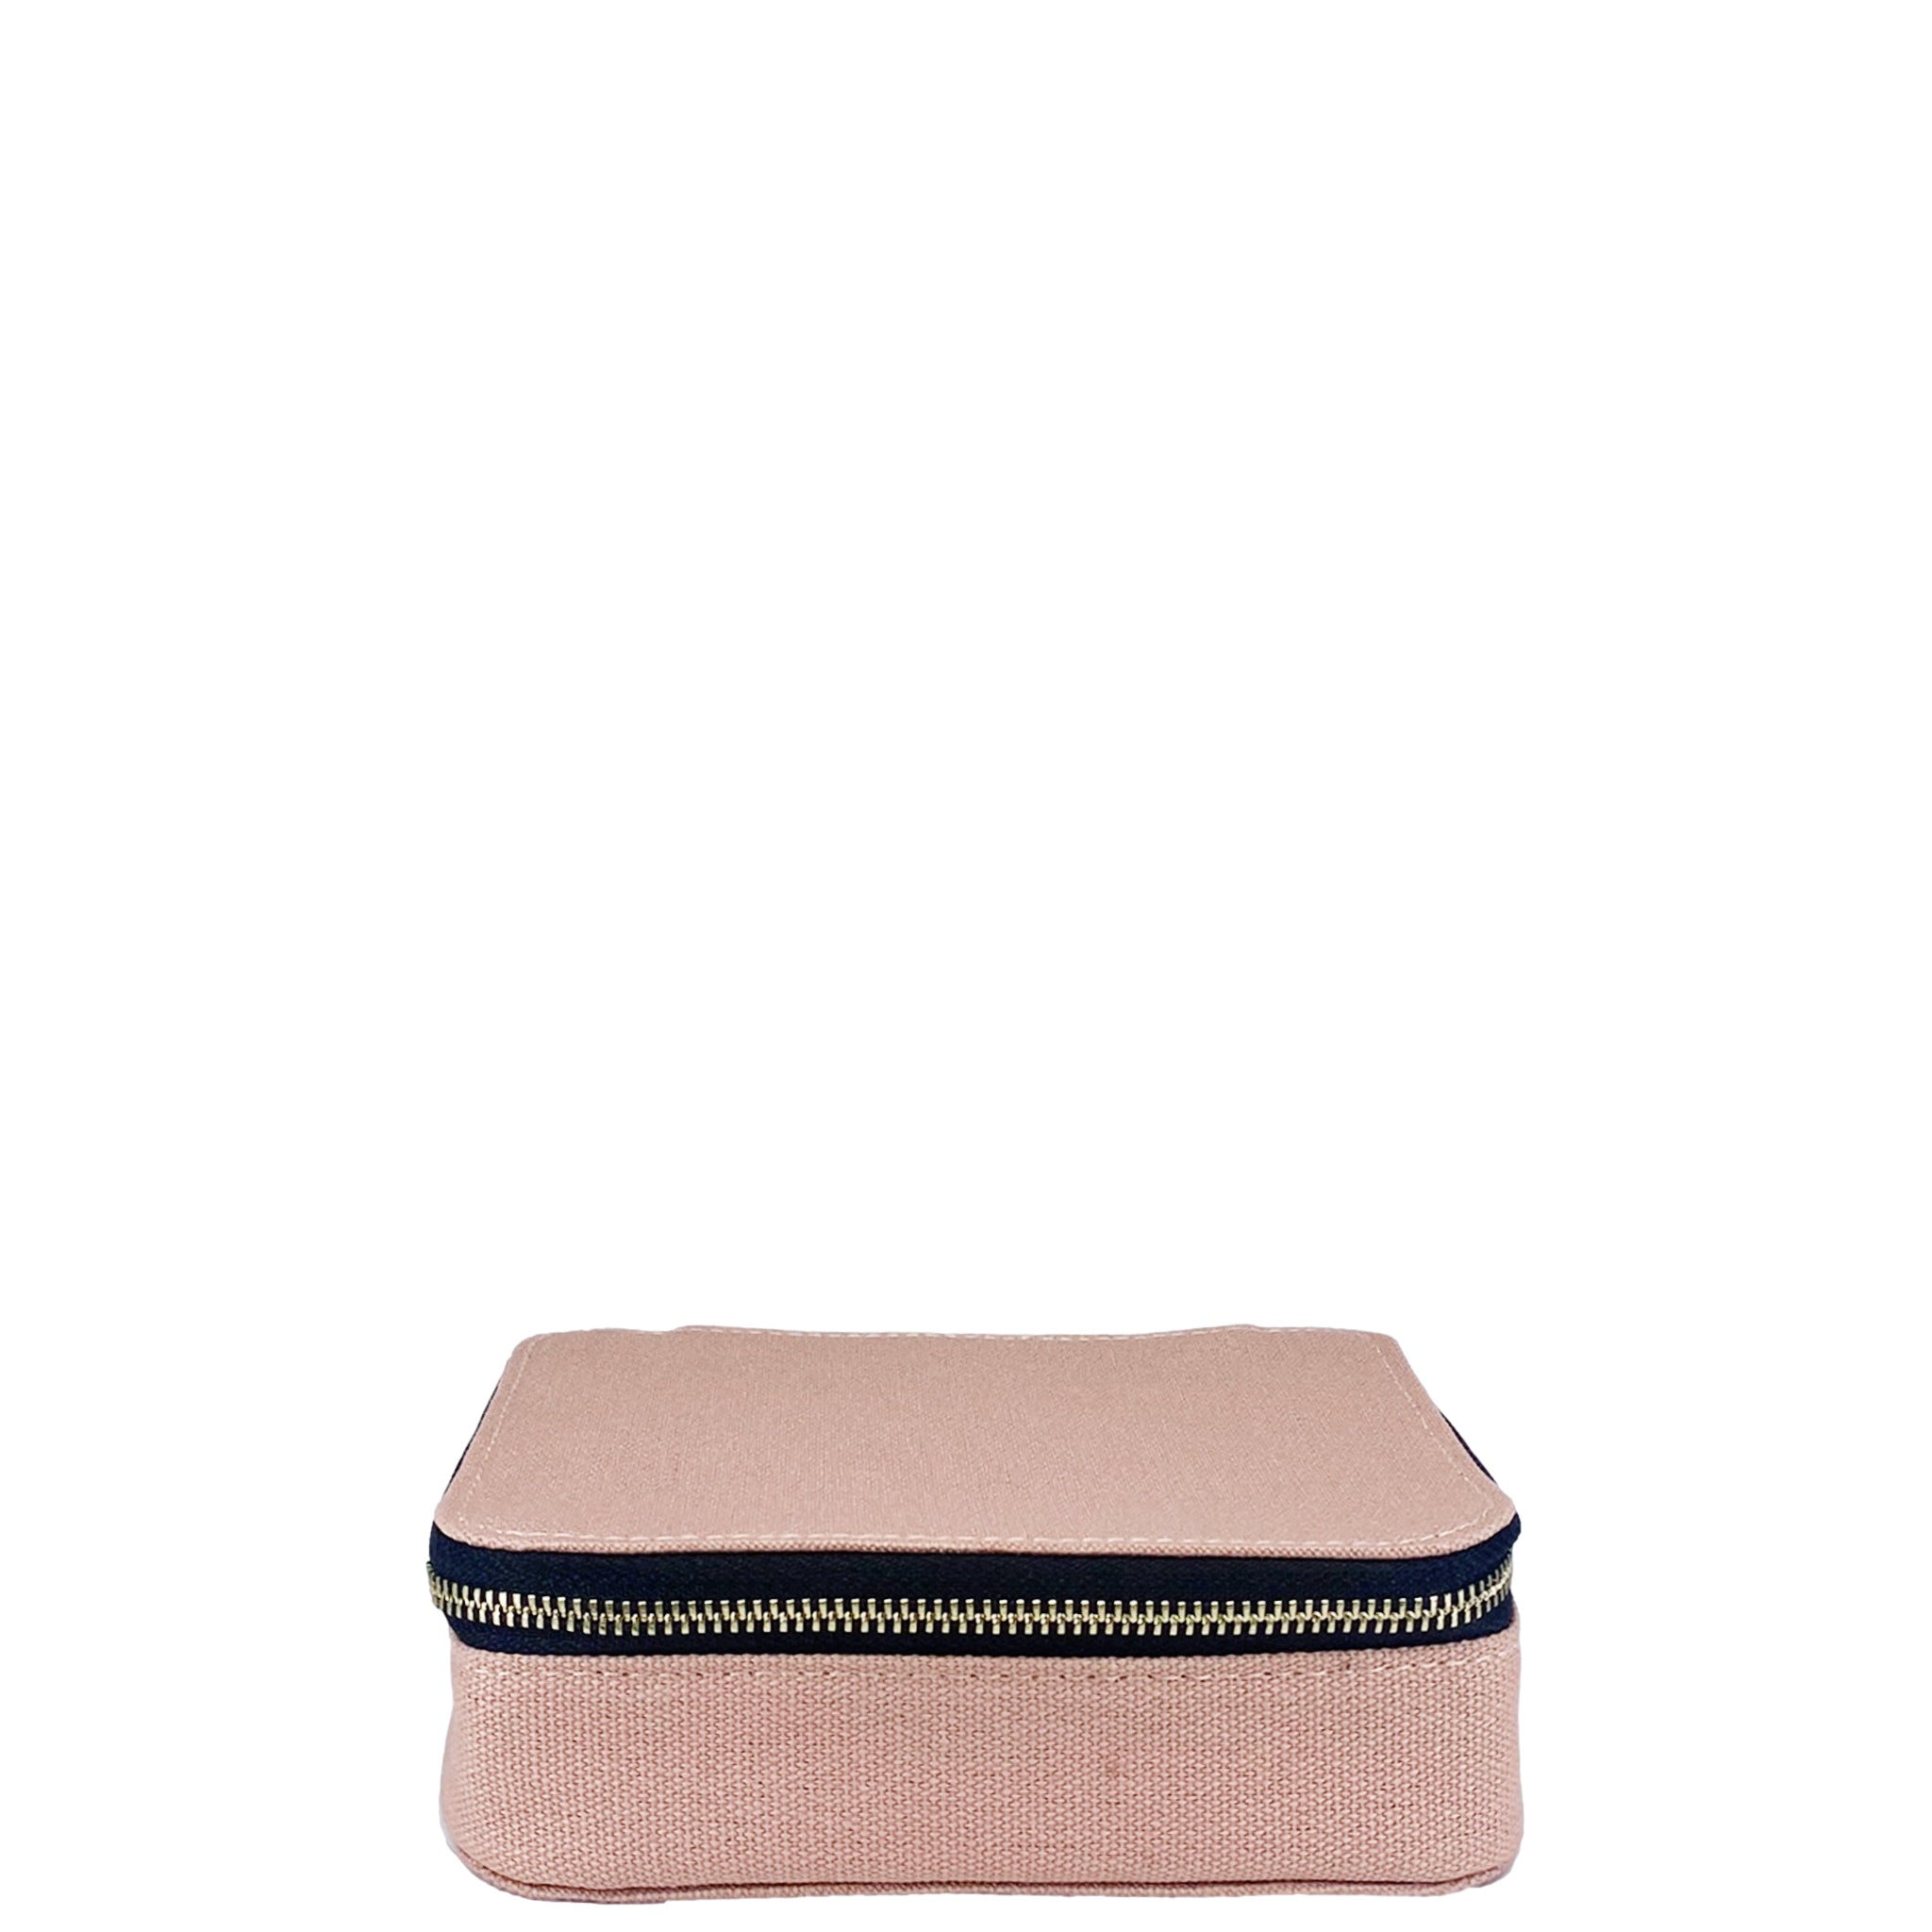 Makeup/Trinket Box, Pink/Blush | Bag-all